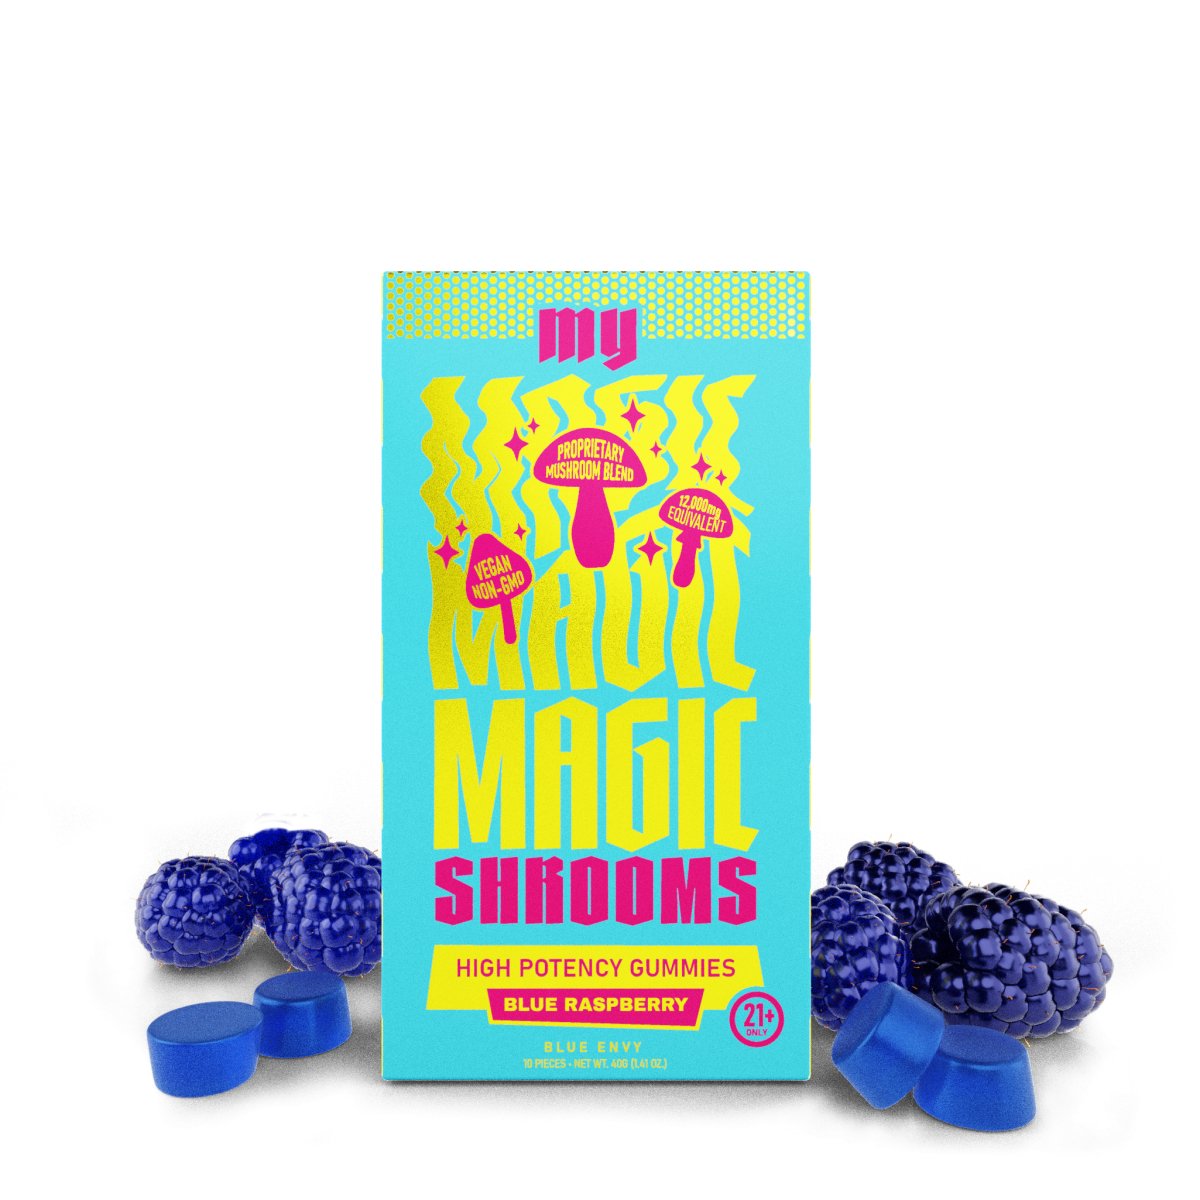 My Magic Shrooms High Potency Gummies Blue Raspberry